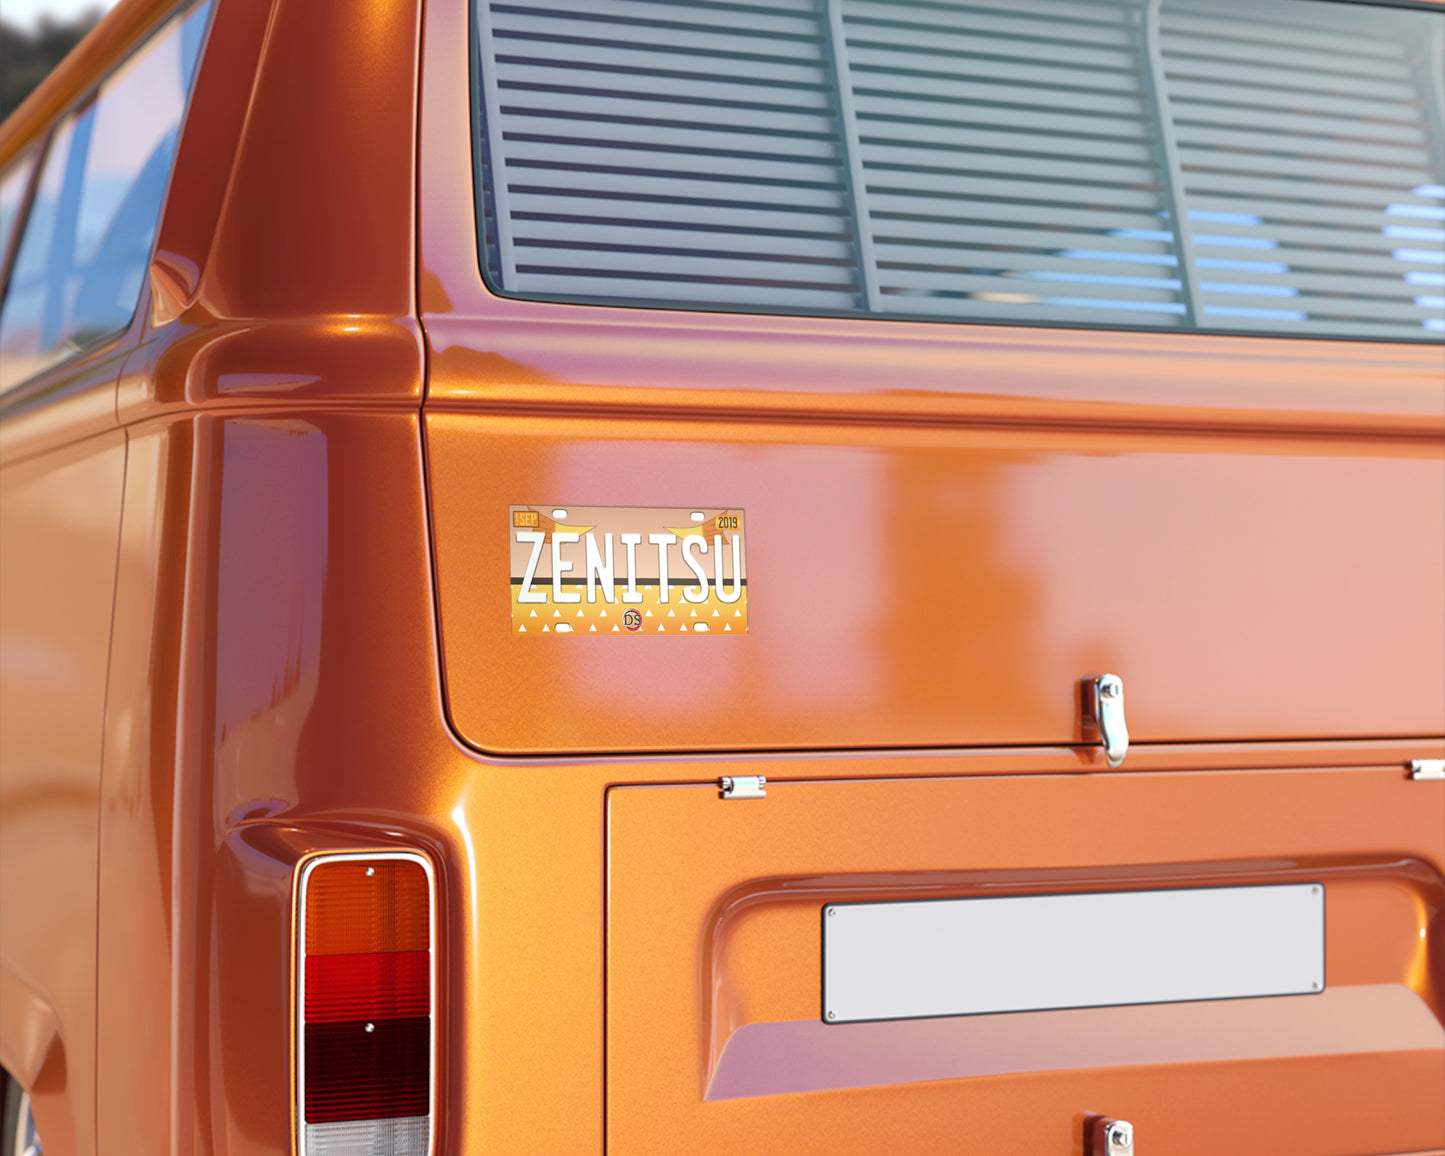 Zenitsu bumper sticker